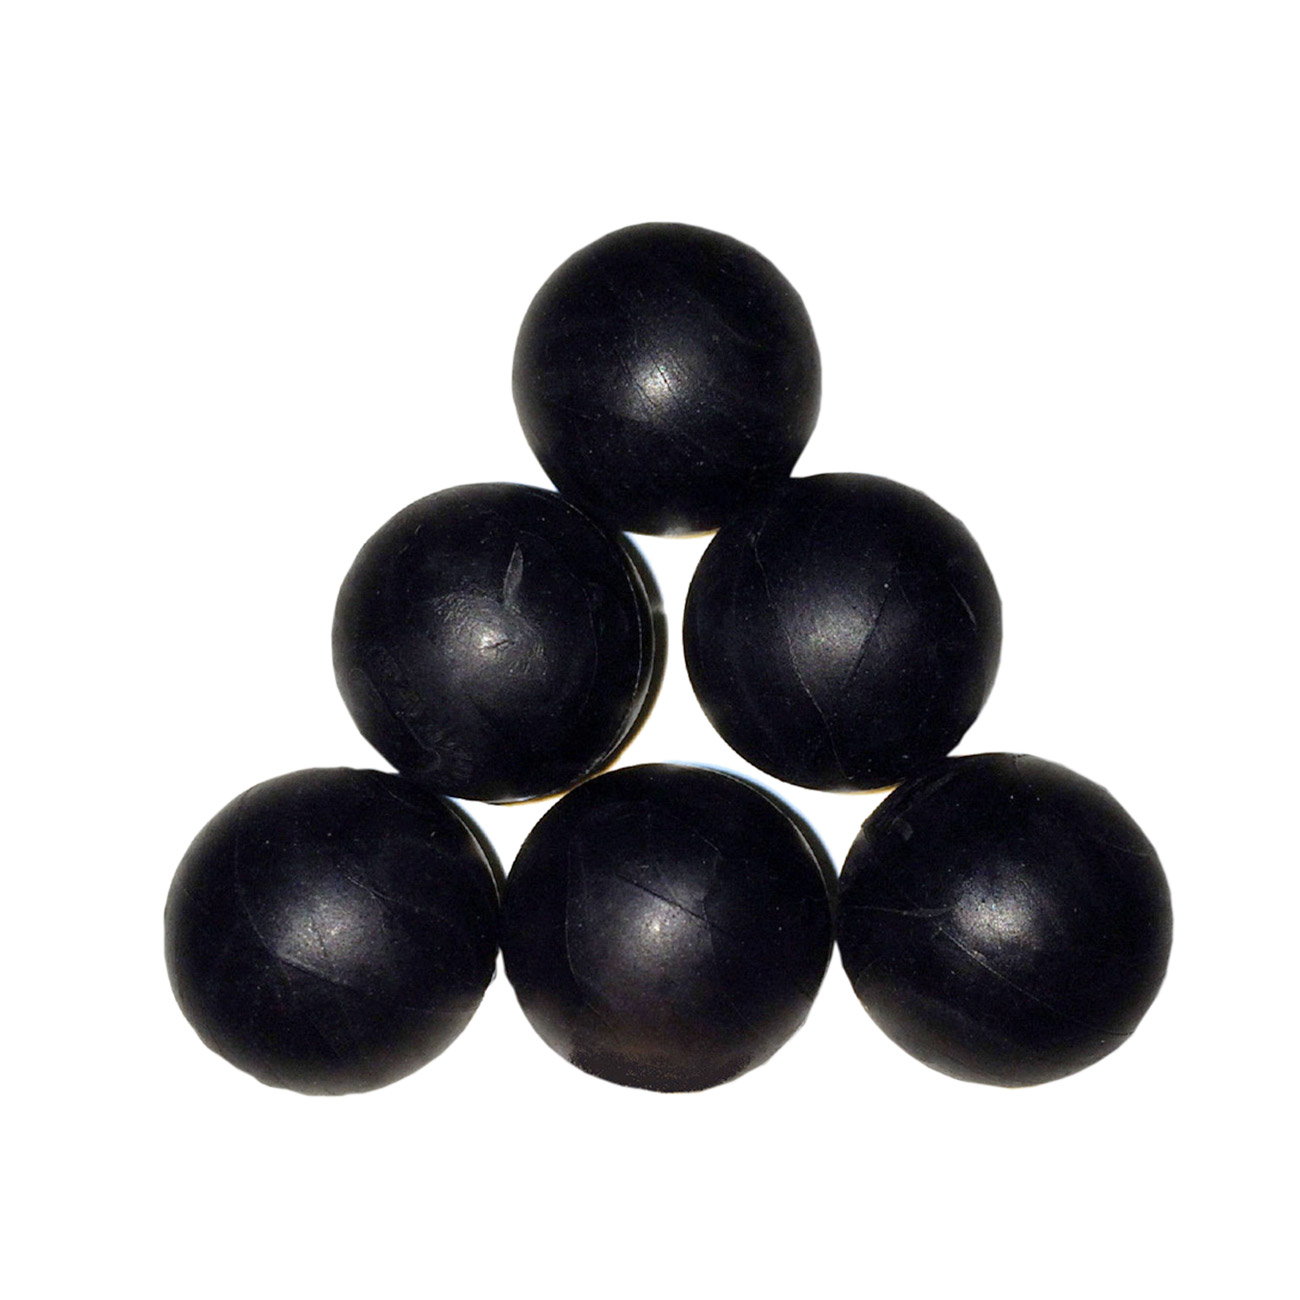 First Strike Kunststoffkugeln Black Deathballs Kaliber .68 25 Stück Bild 1